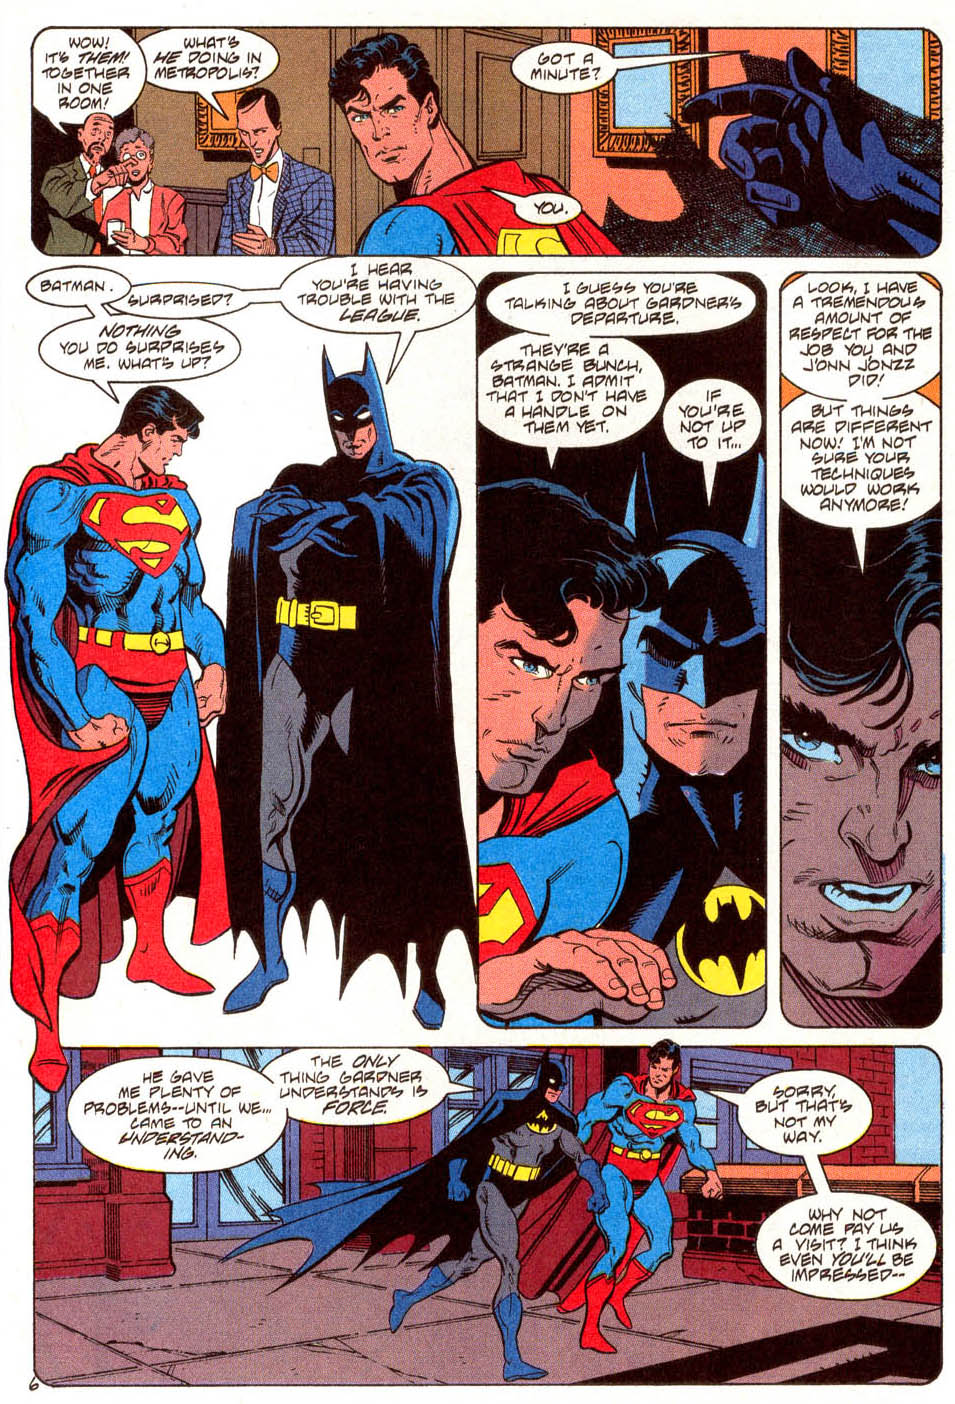 Justice League America 66 Page 6